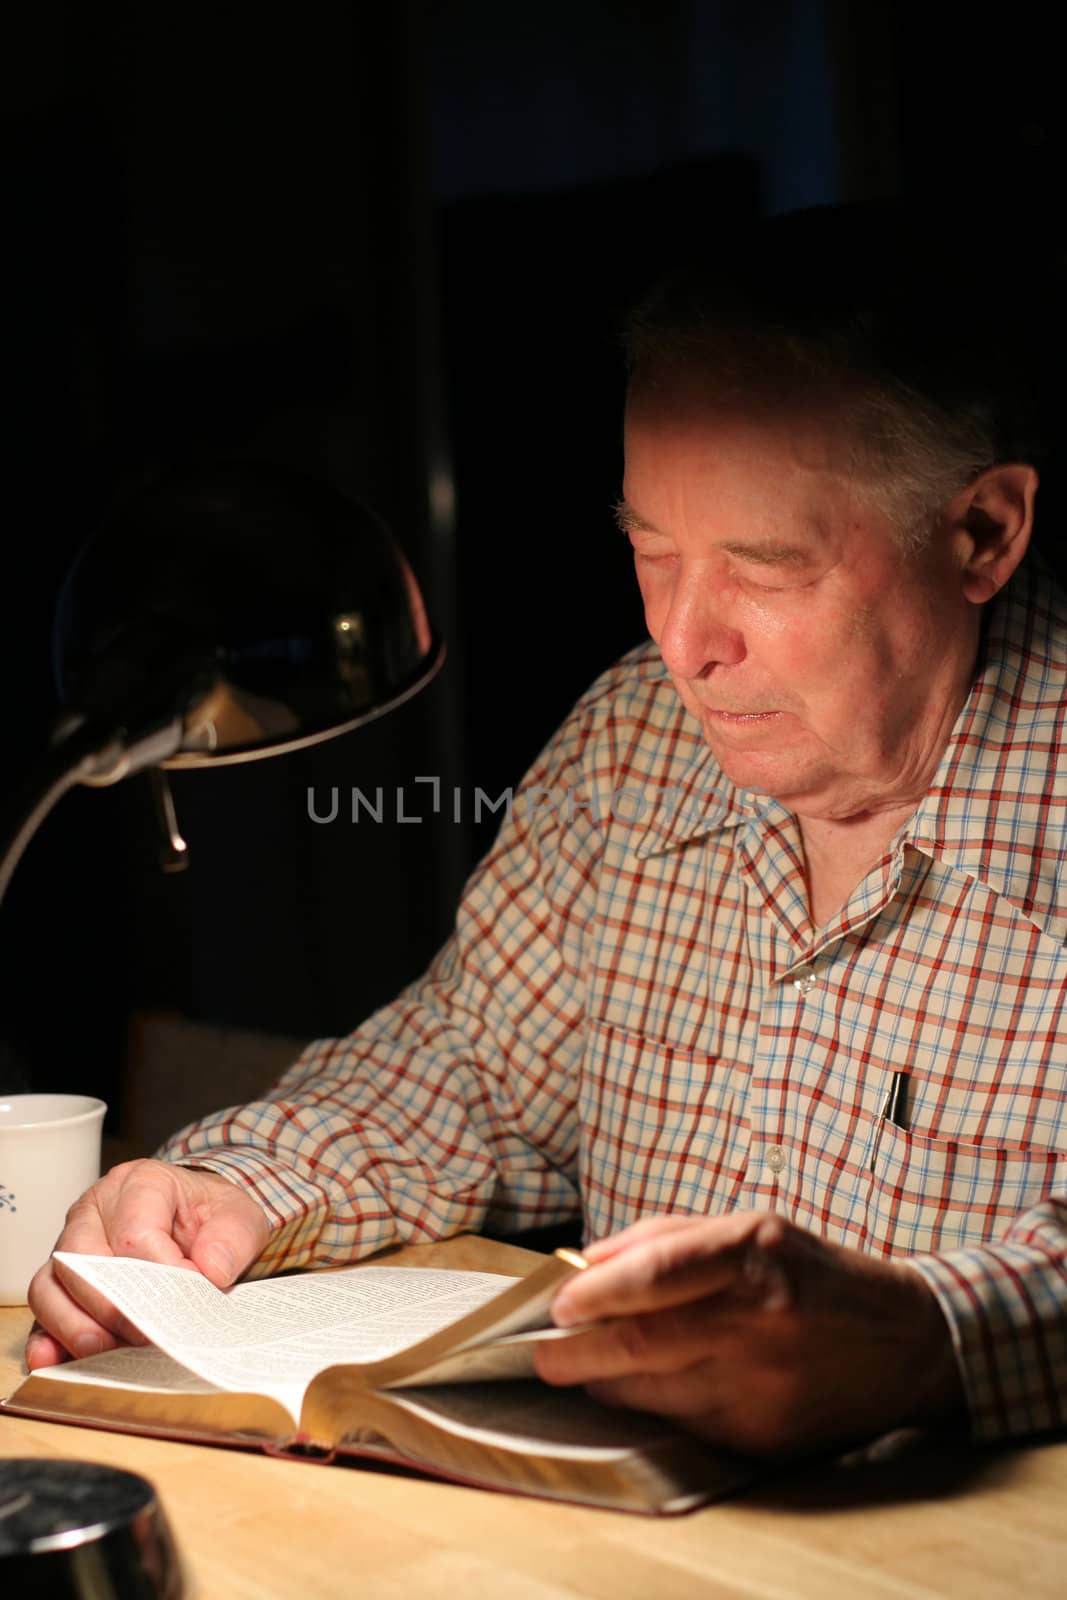 ELderly man reading Bible  with lamp at night by jarenwicklund